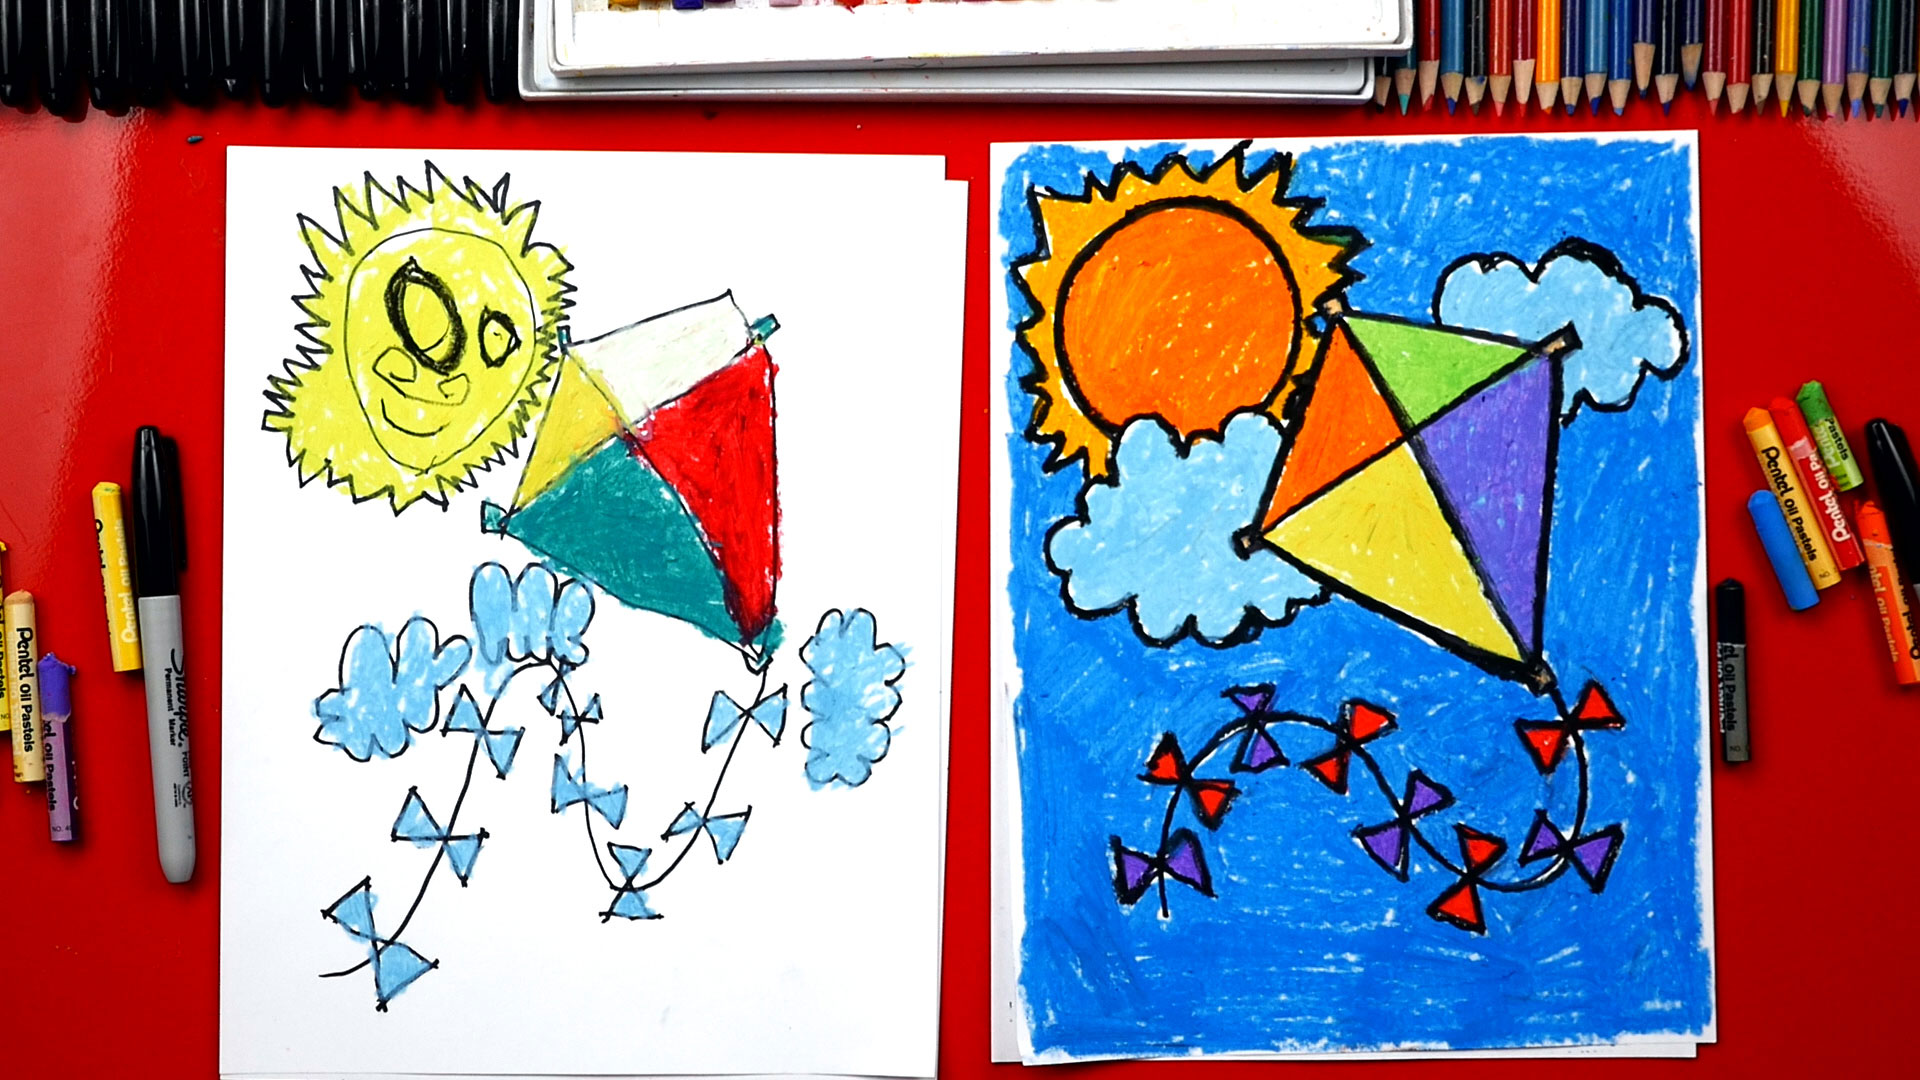 Simple Drawing For Kids - Children Flying Kites With MR. MJ - YouTube |  Drawing for kids, Art drawings for kids, Easy drawings